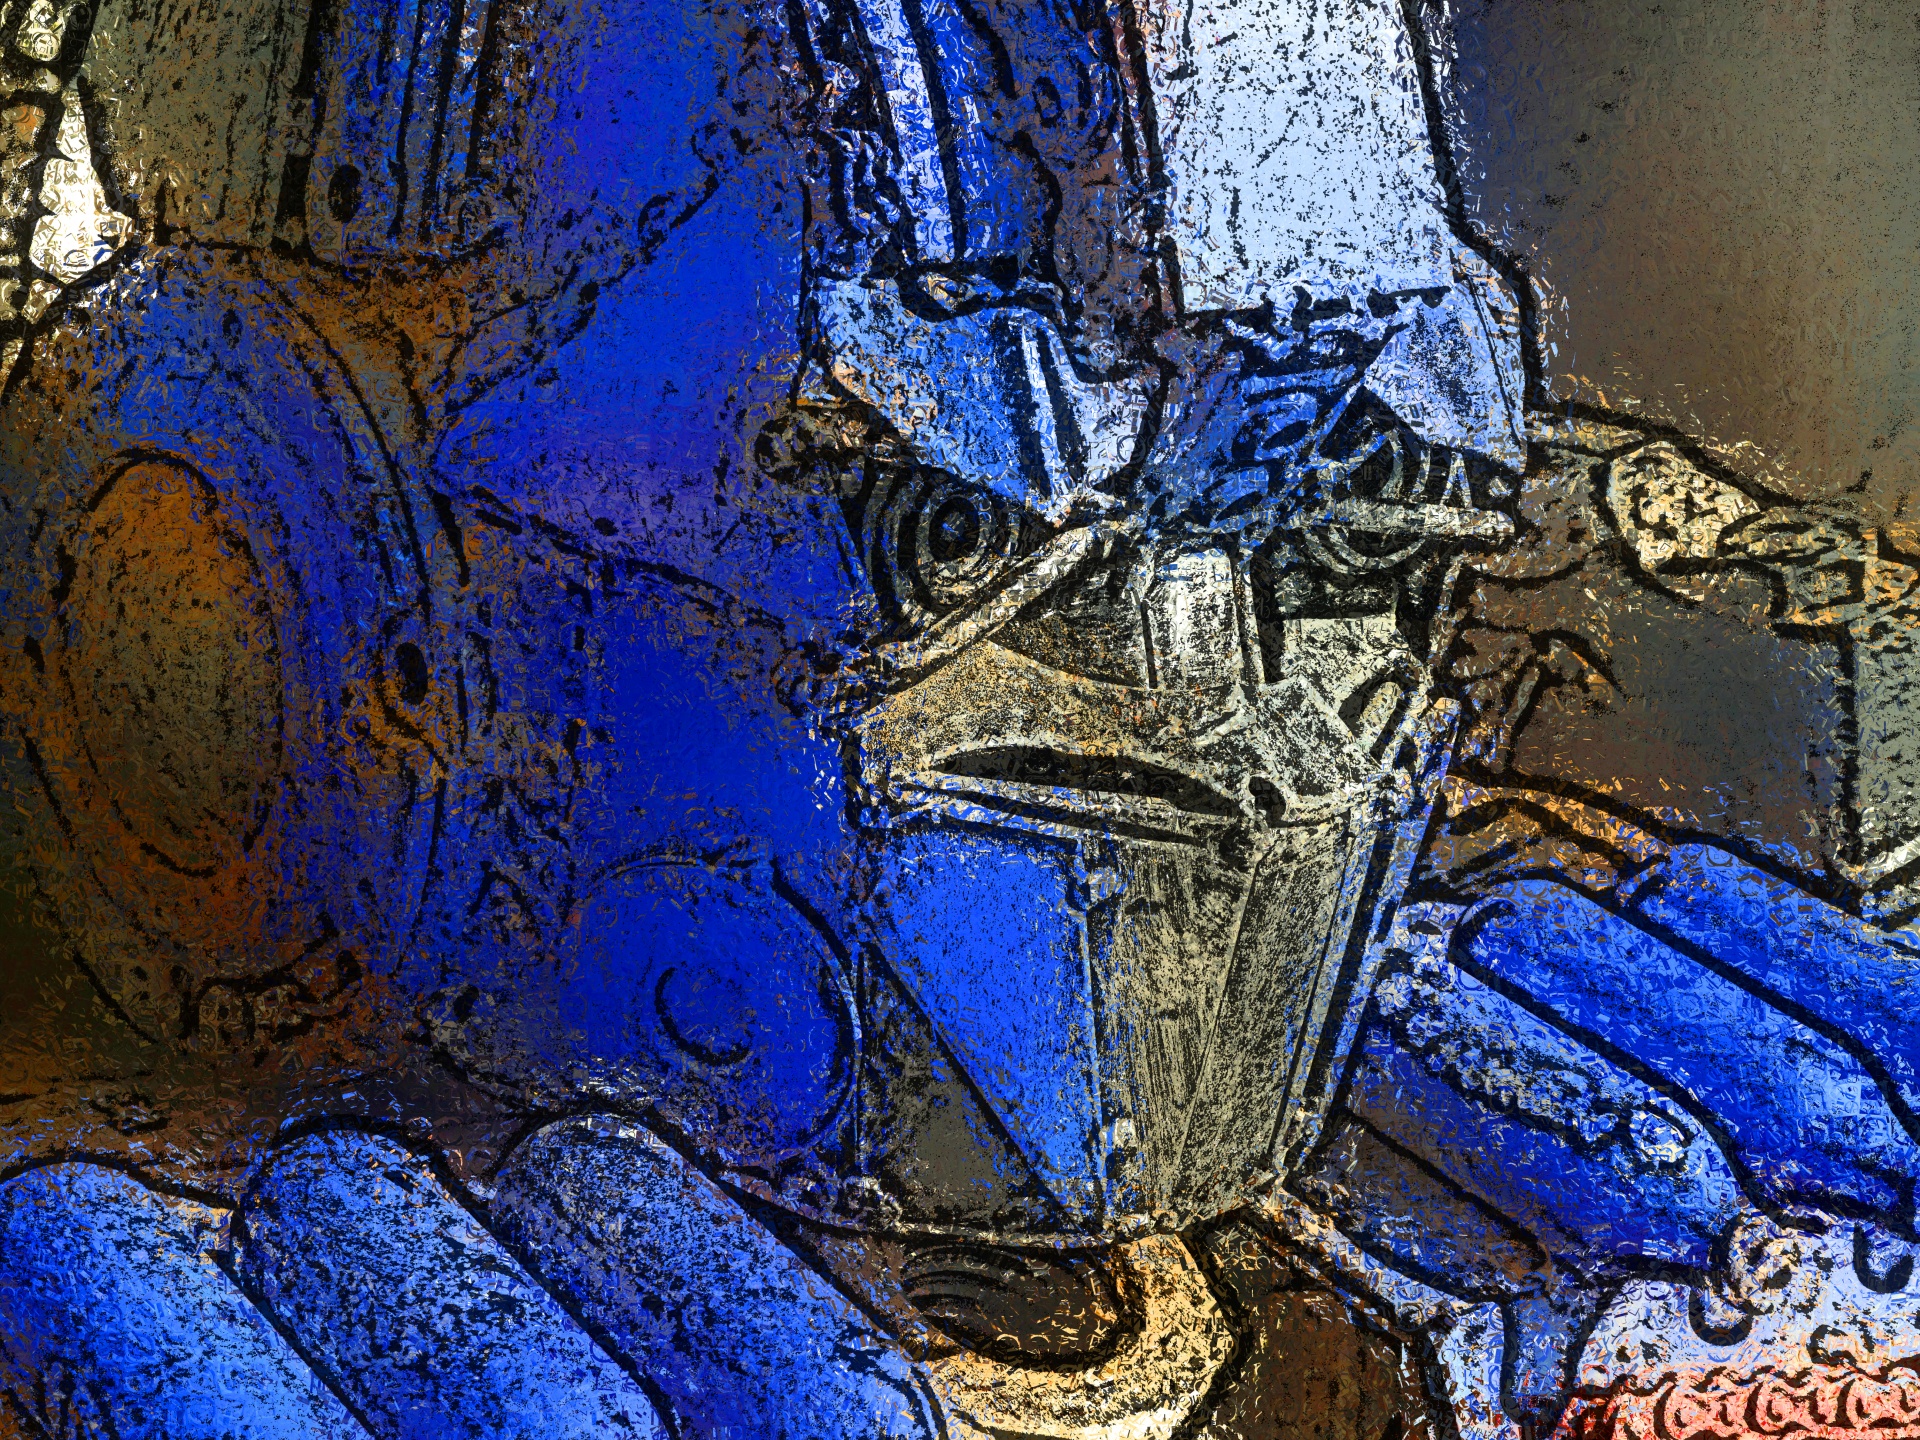 artistic rendering of a metal robot artifact